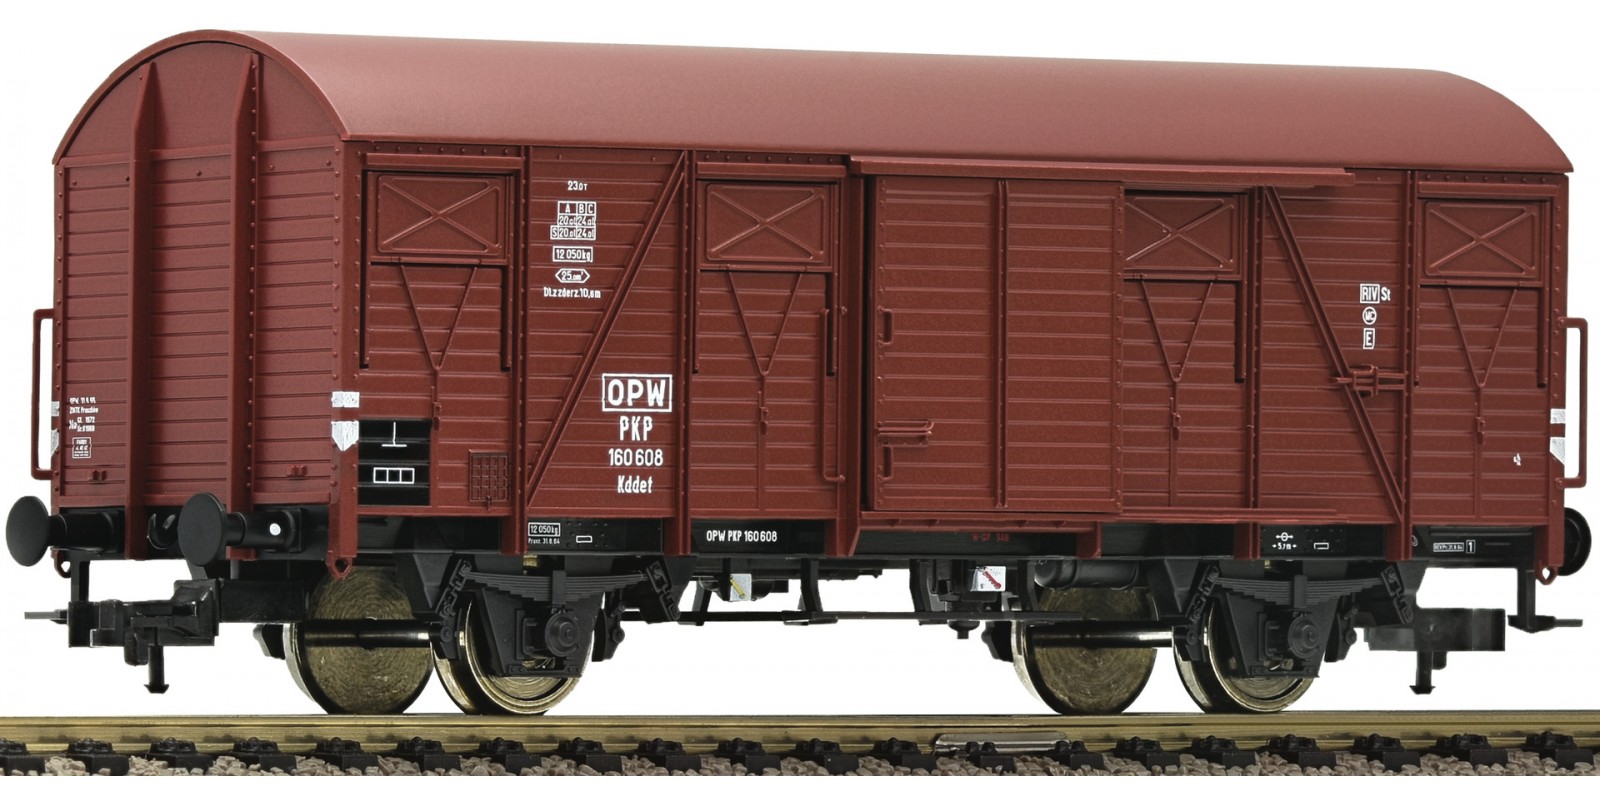 FL531103 - Boxcar type Kddet, PKP